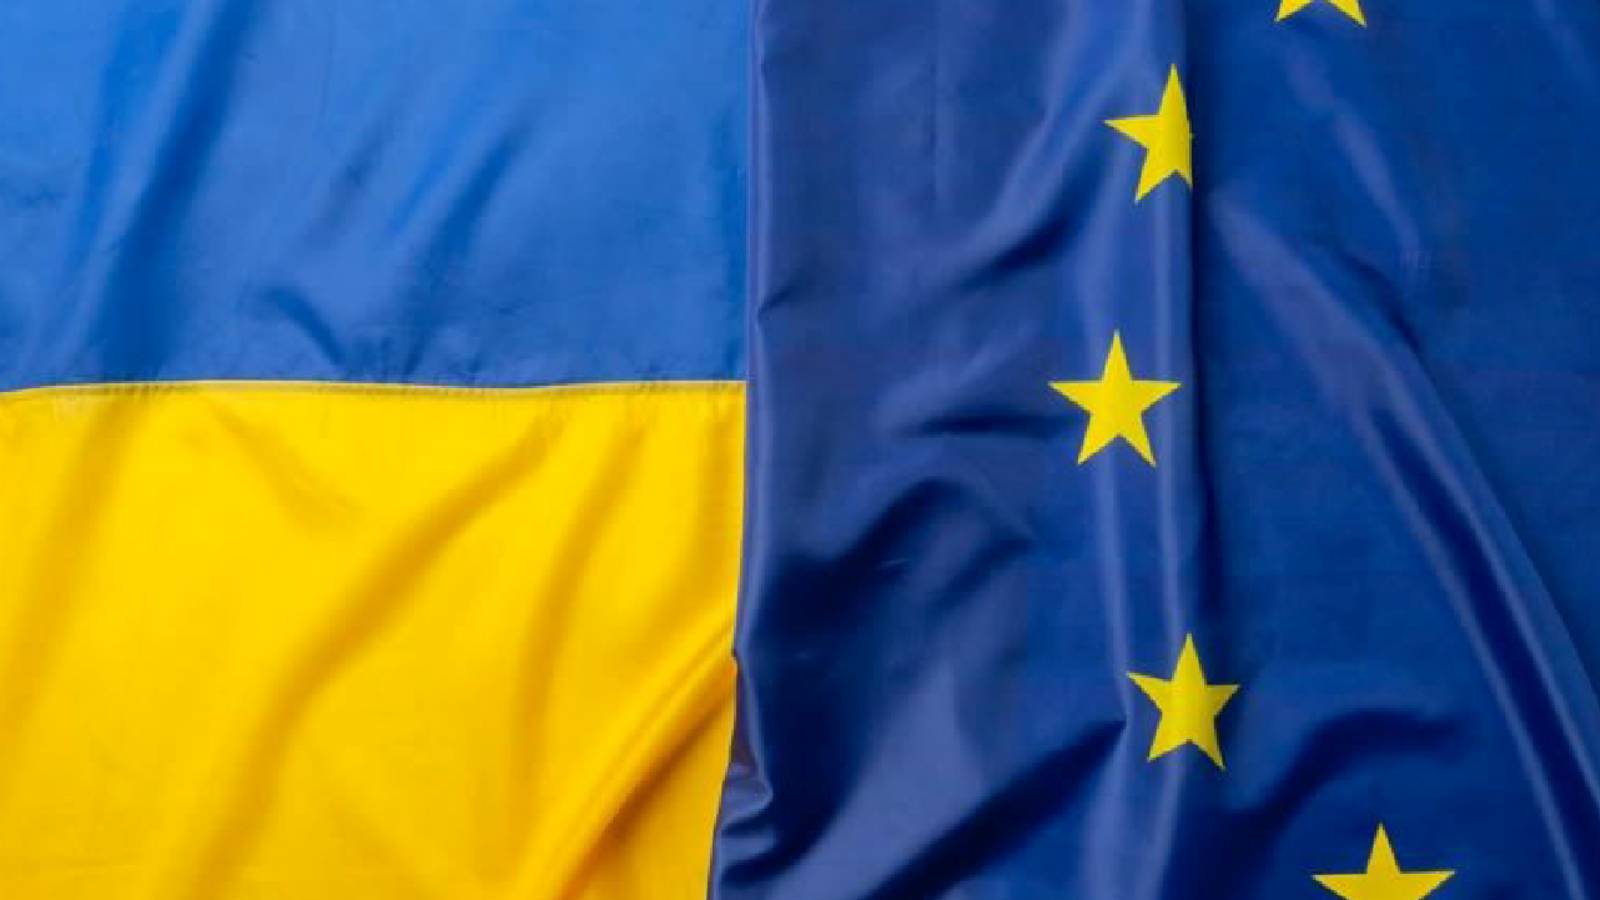 Comisia Europeana vrea sa Extinda 4 Coridoare de Transport pentru Ucraina si Republica Moldova